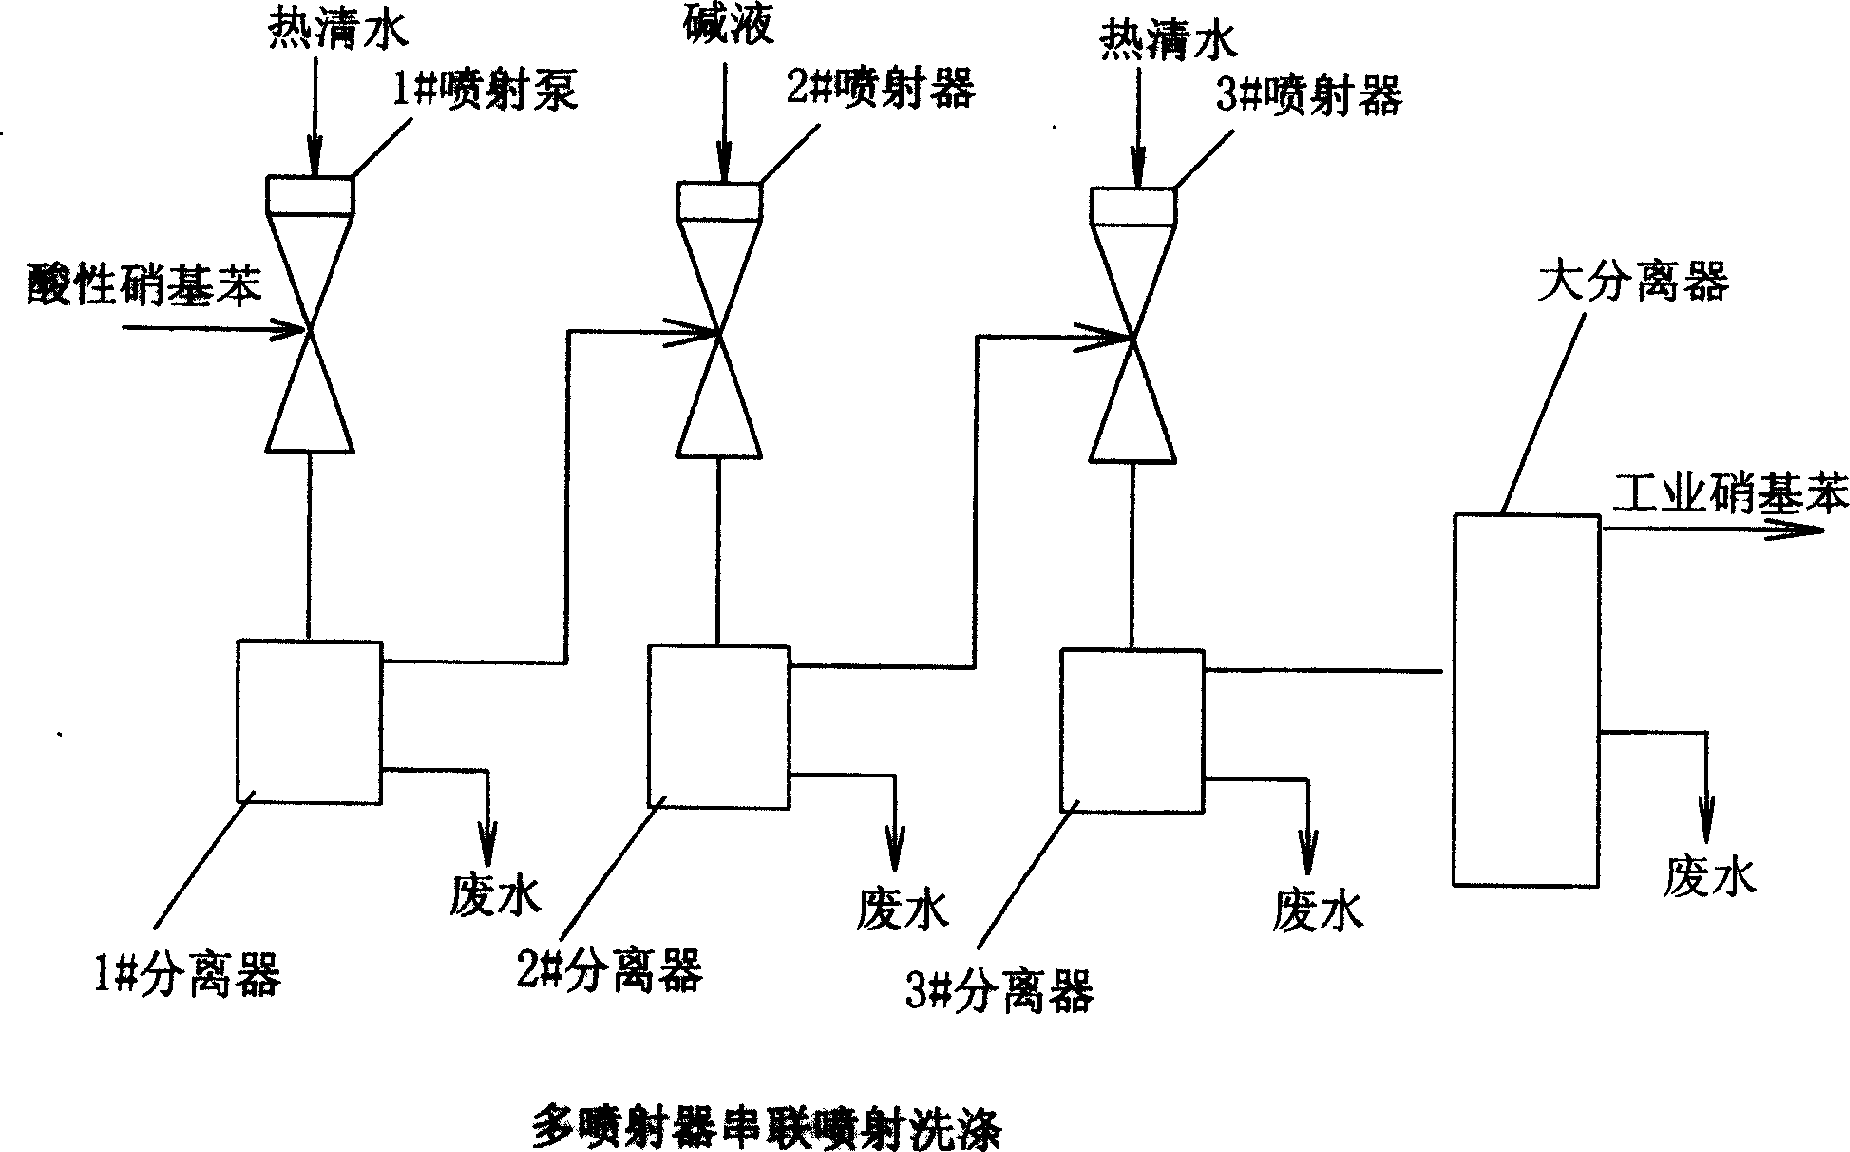 Equipment and method for washing prodn. of nitrobenzene